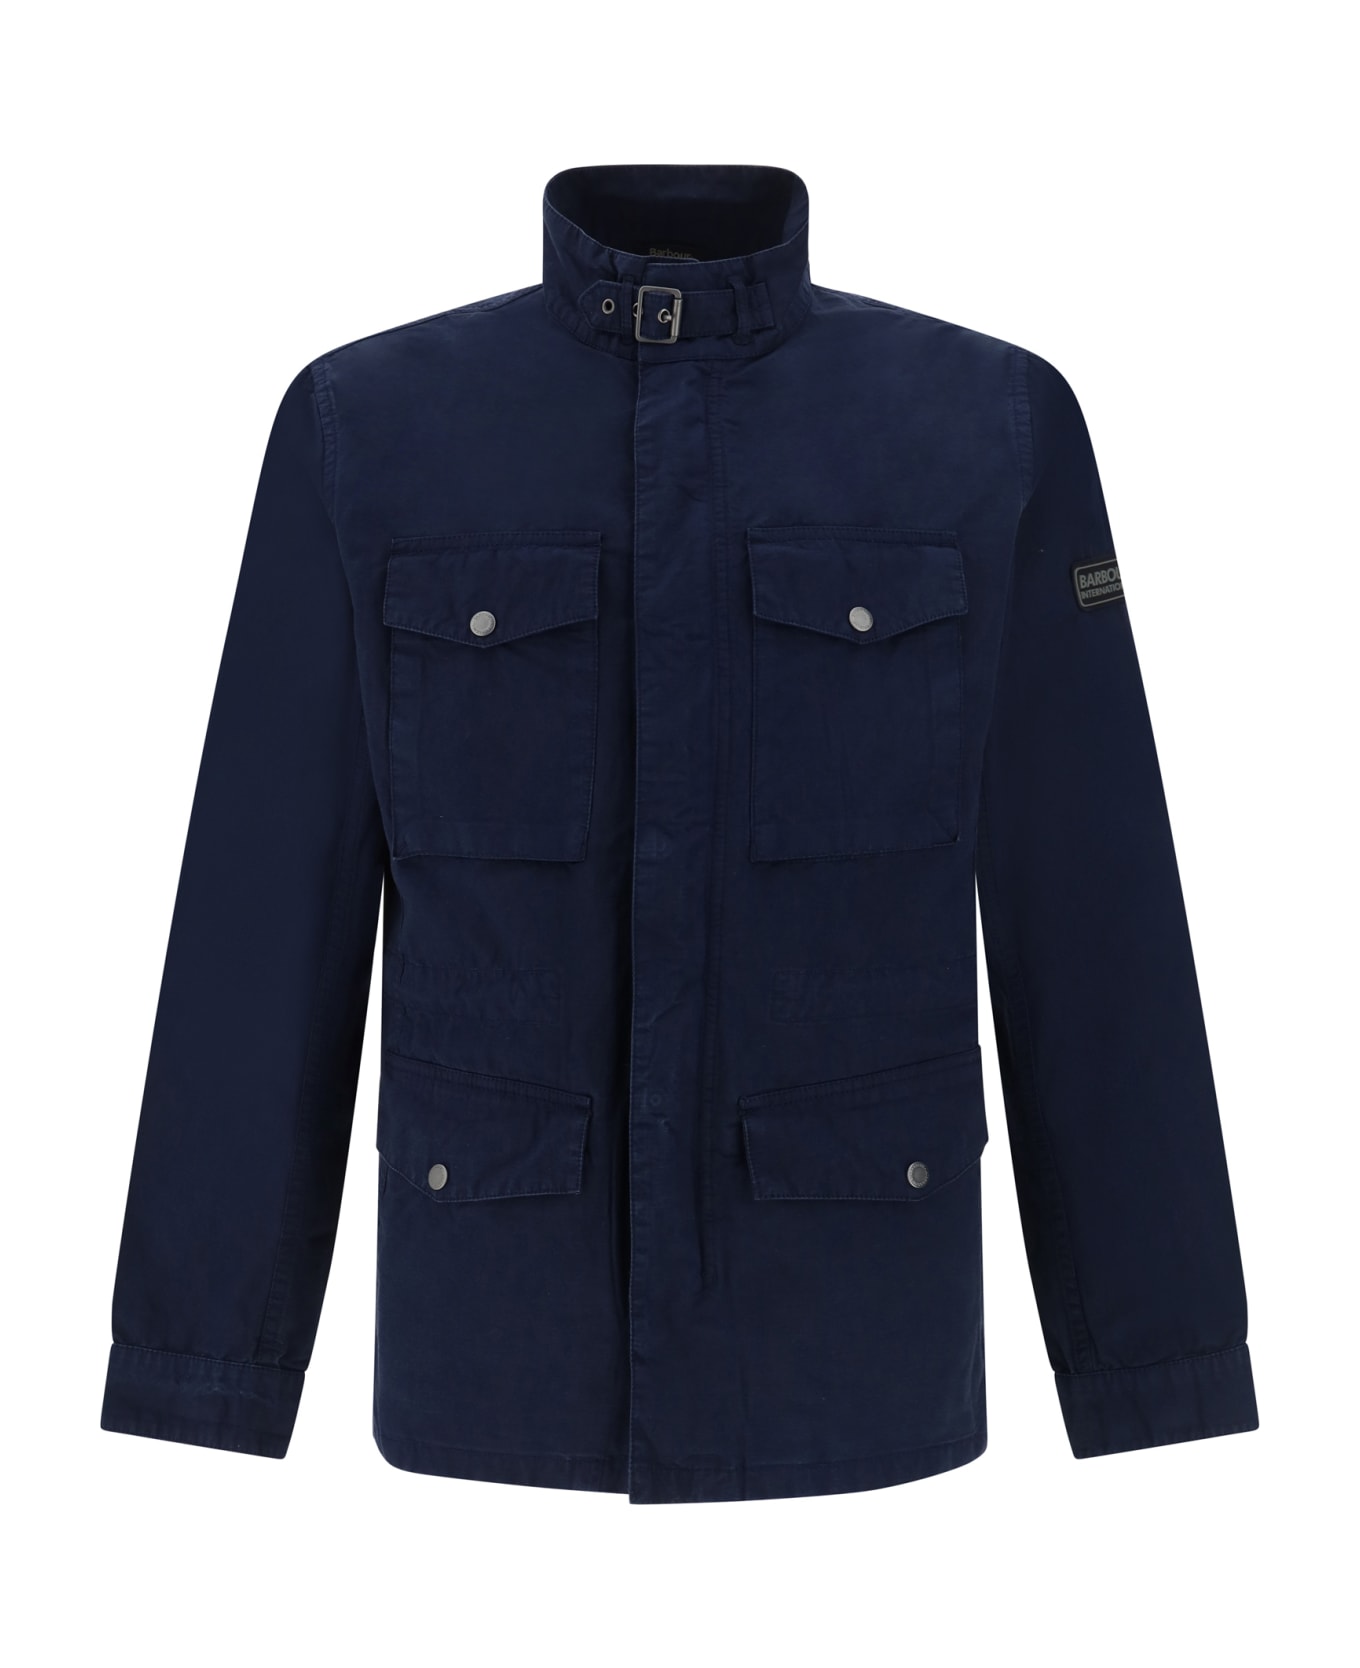 Barbour Tourer Chatfield Jacket - Workwear Navy ジャケット